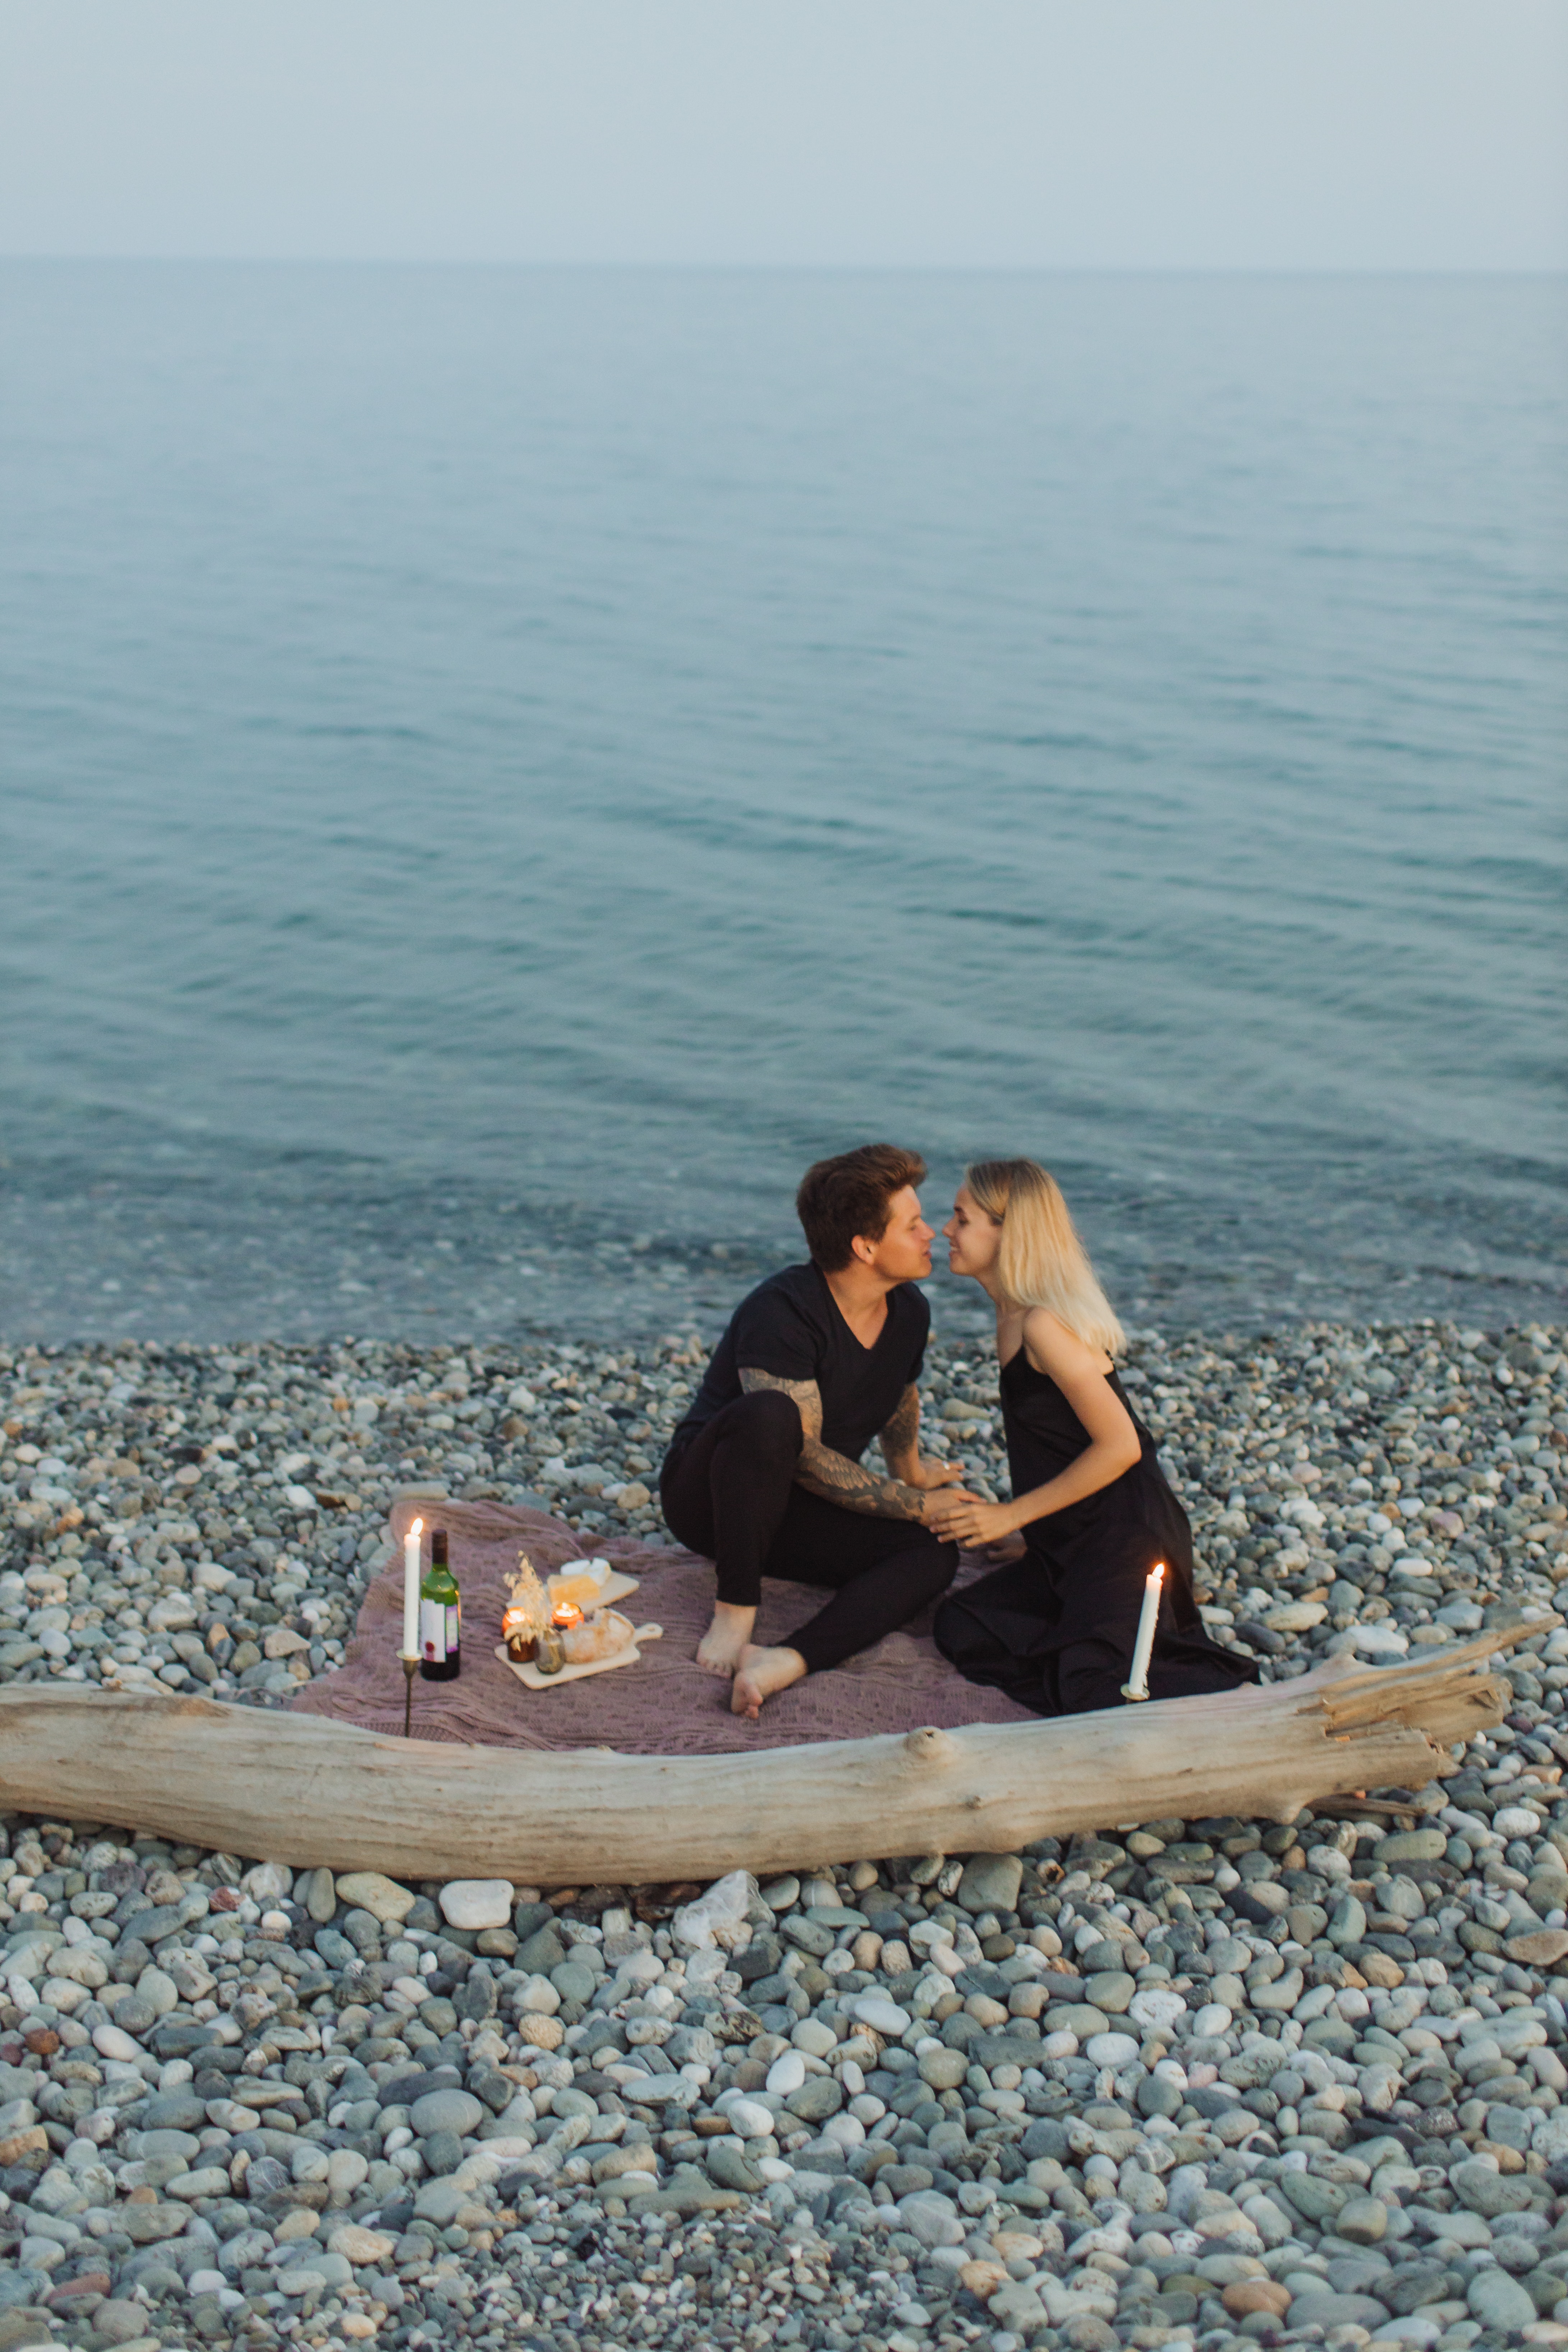 A couple having a romantic date on the beach. | Source: Unsplash